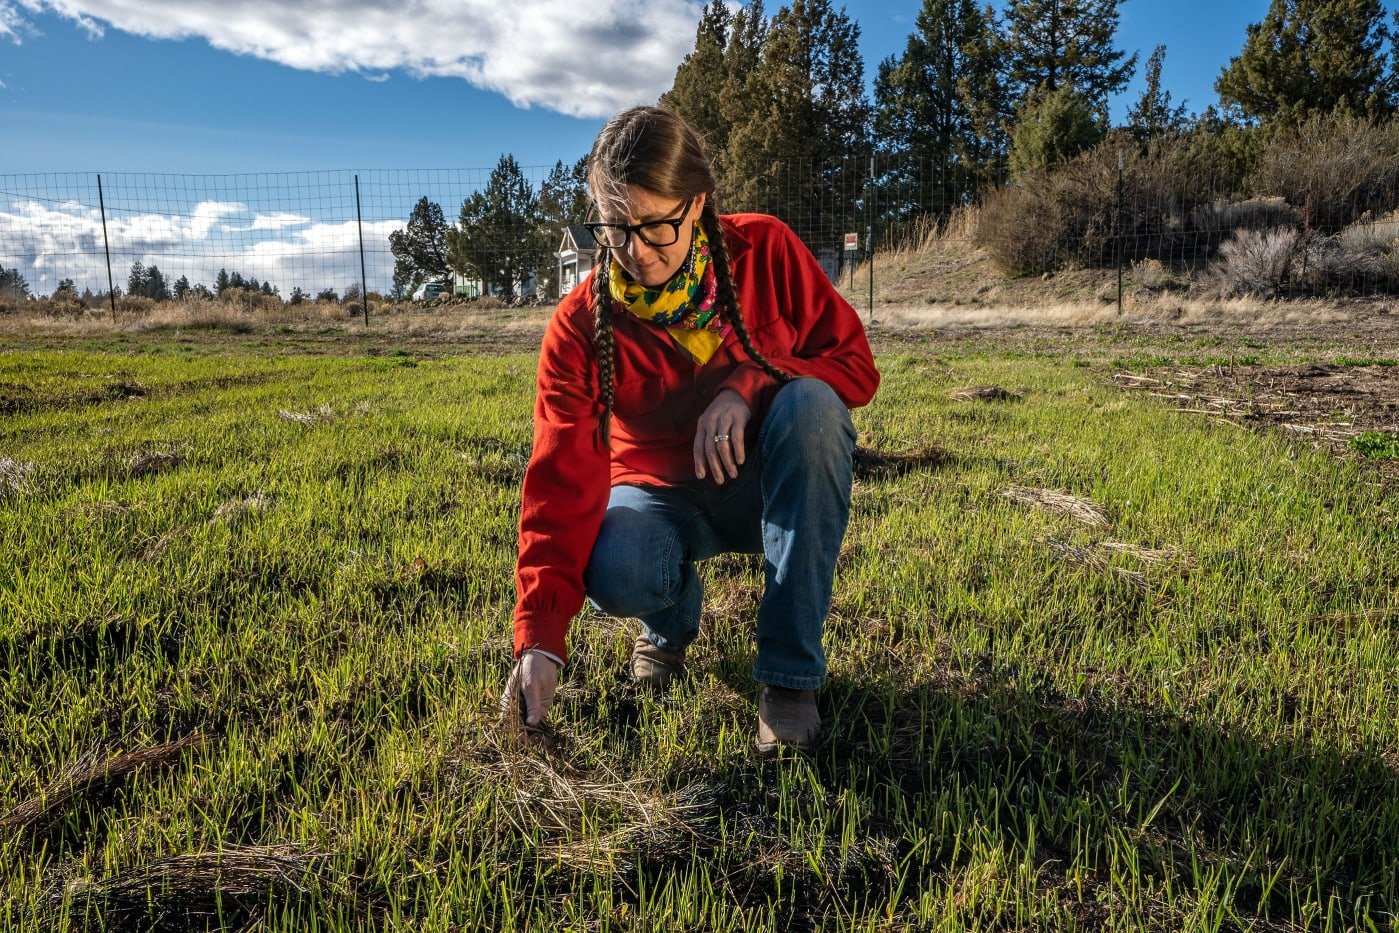 Spring Alaska Schreiner tending to the sweetgrass plot on Sakari Farms